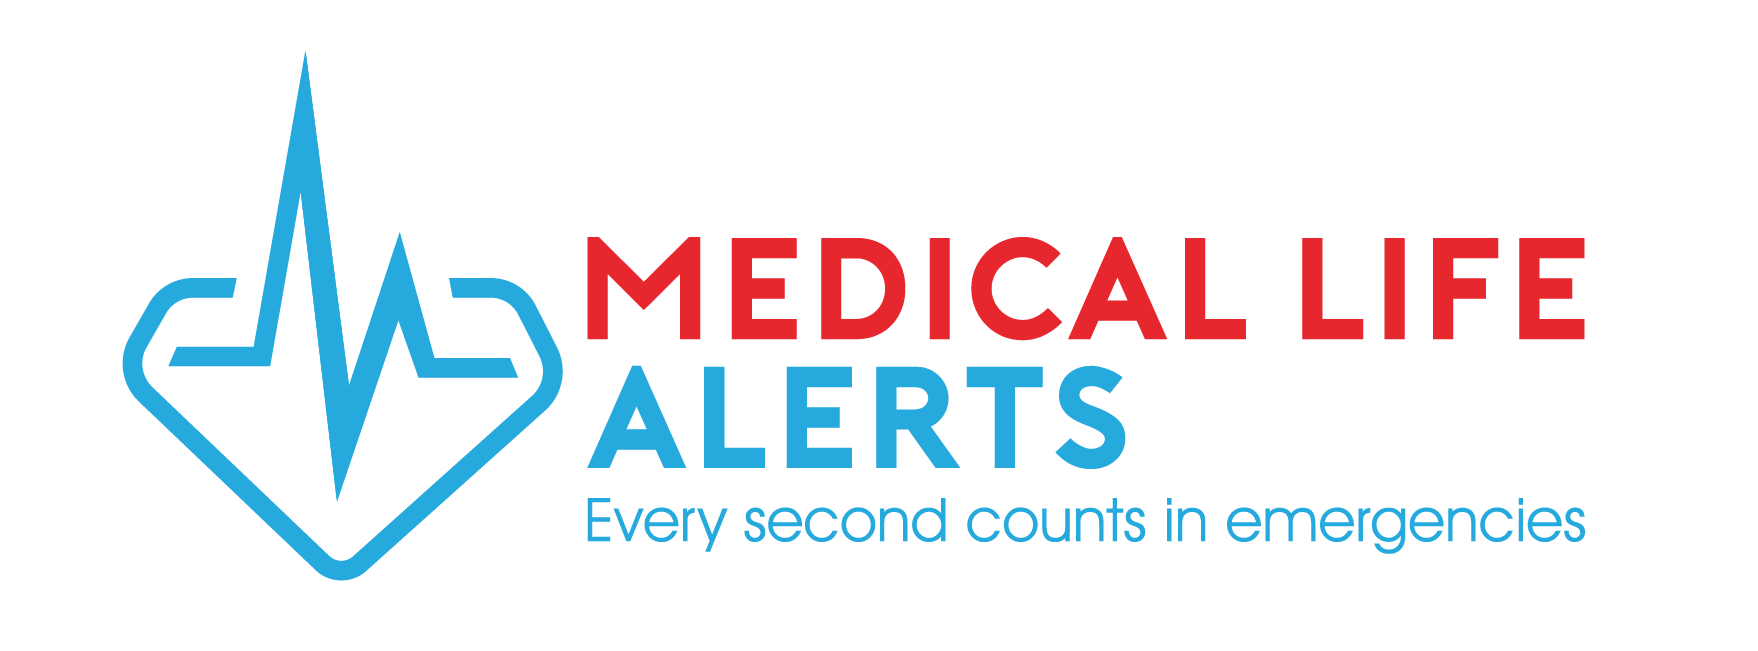 medical life alerts